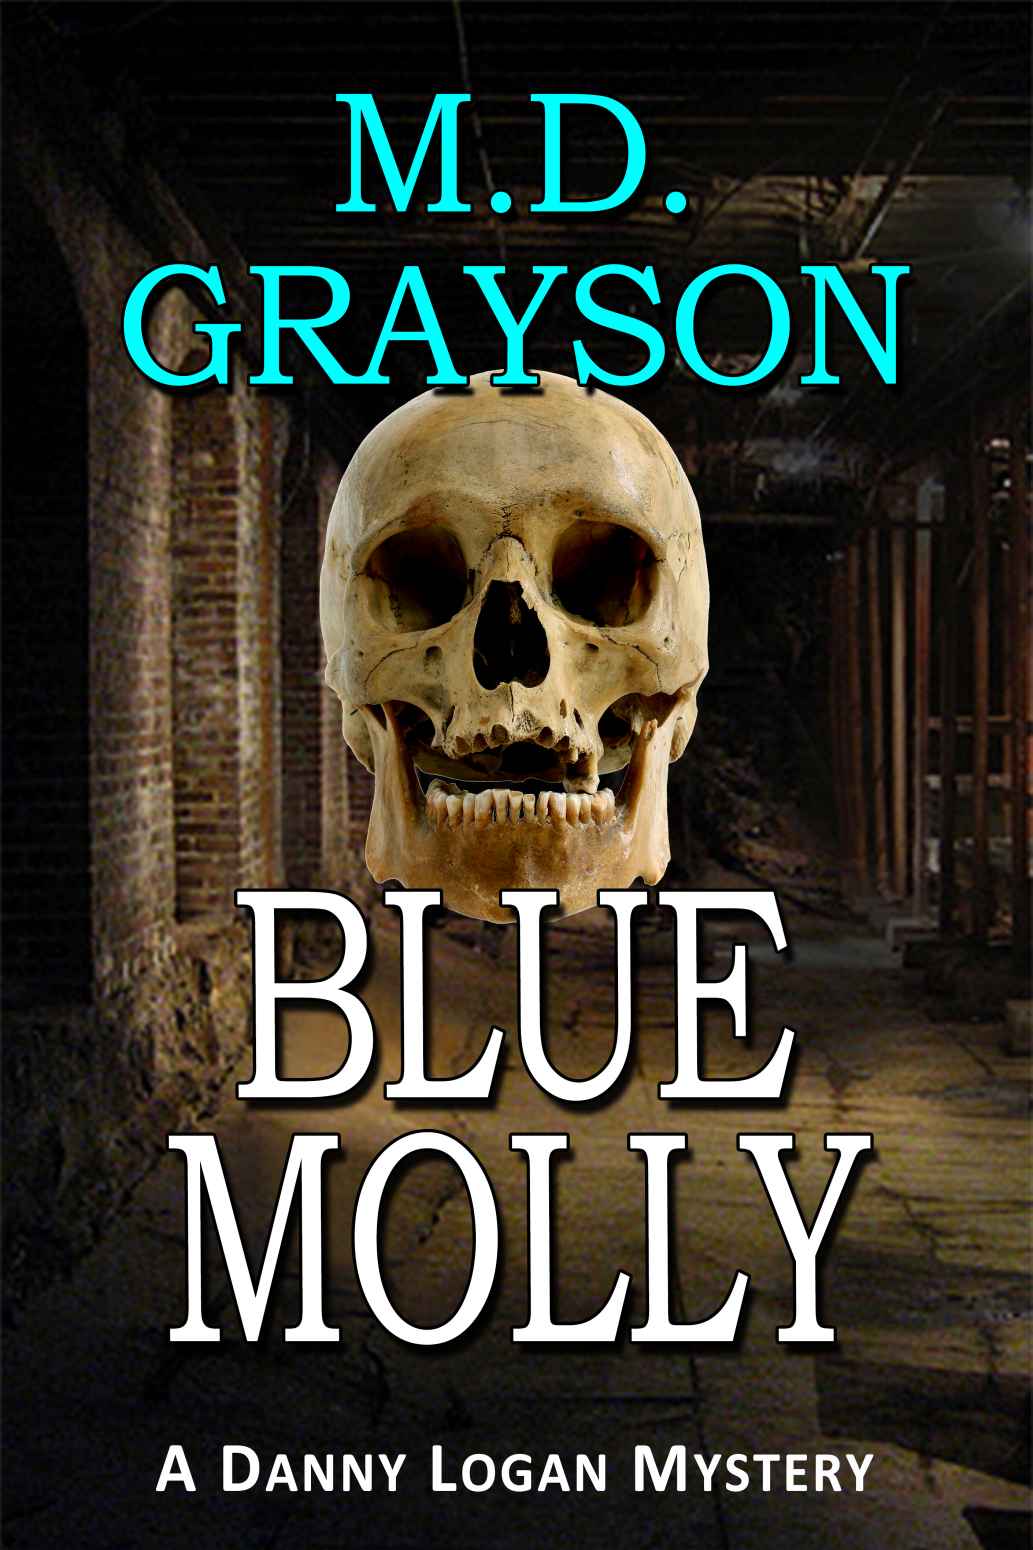 Blue Molly (Danny Logan Mystery #5) by M.D. Grayson